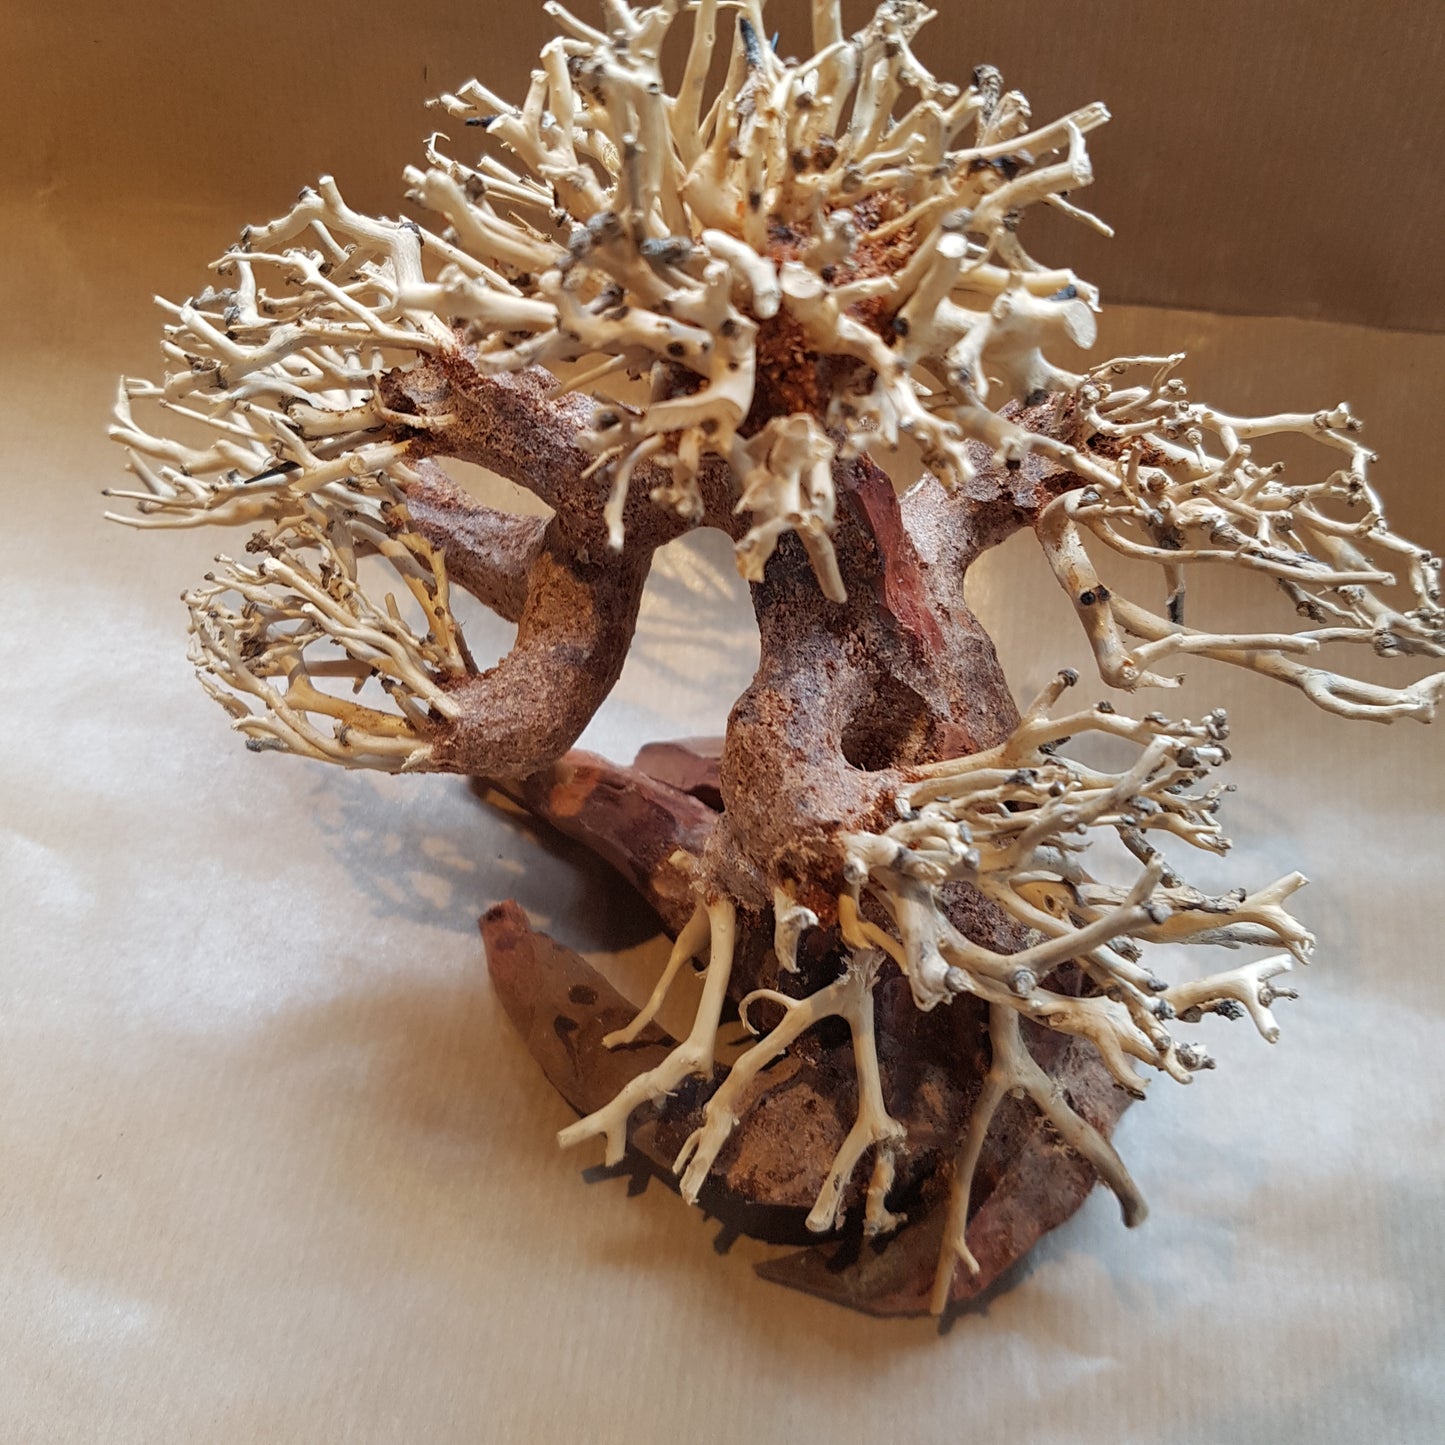 Aquarium wood/resin bonsai tree decoration